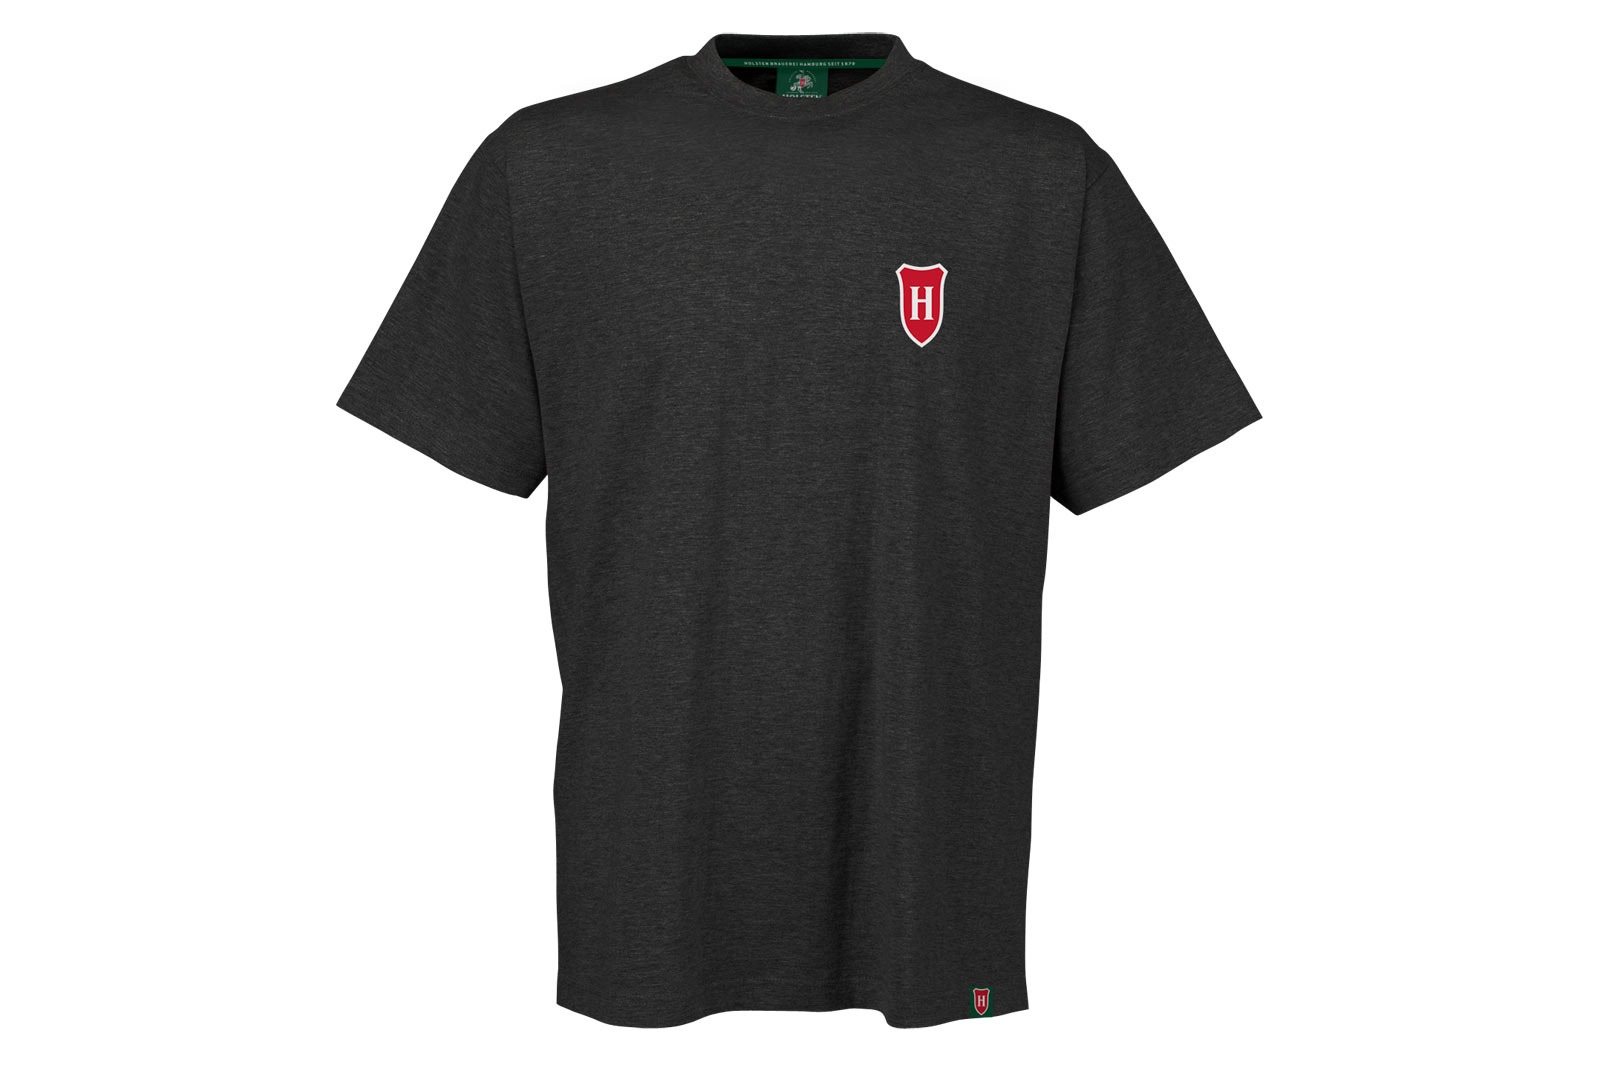 Herren-T-Shirt, anthrazit-meliert „Emblem“